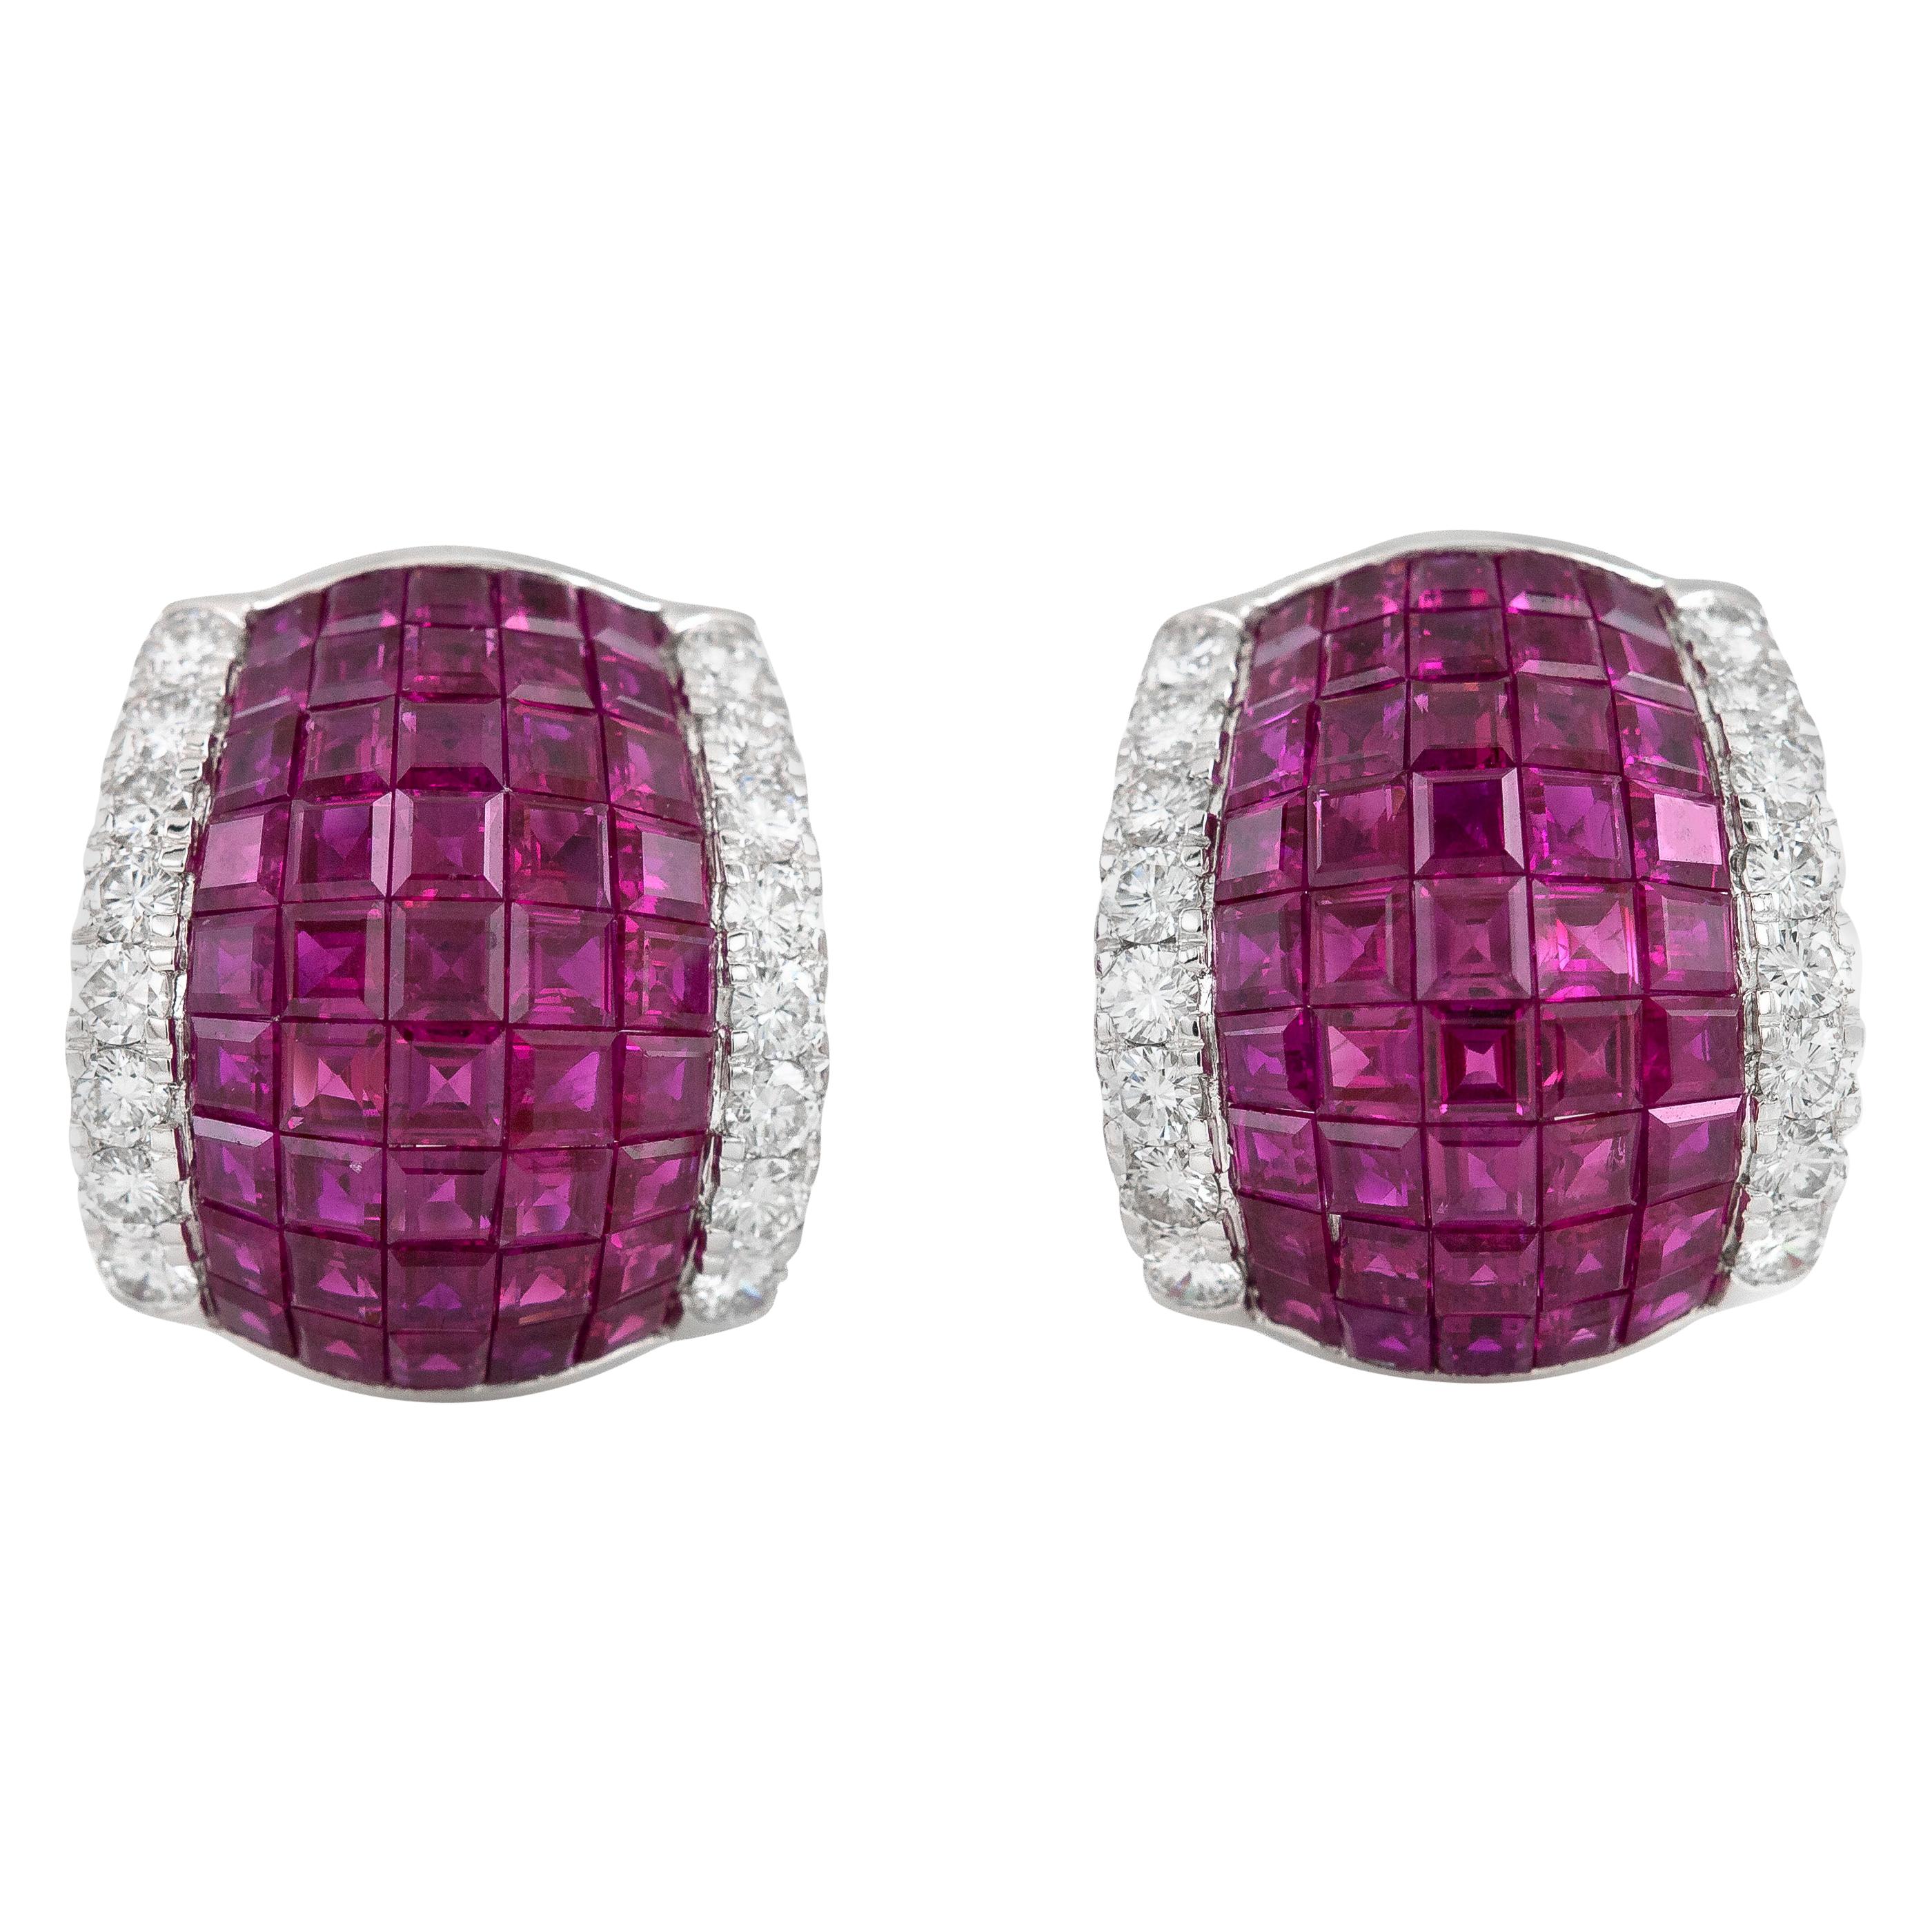 Oscar Heyman Invisible Setting Ruby Earrings with Diamonds